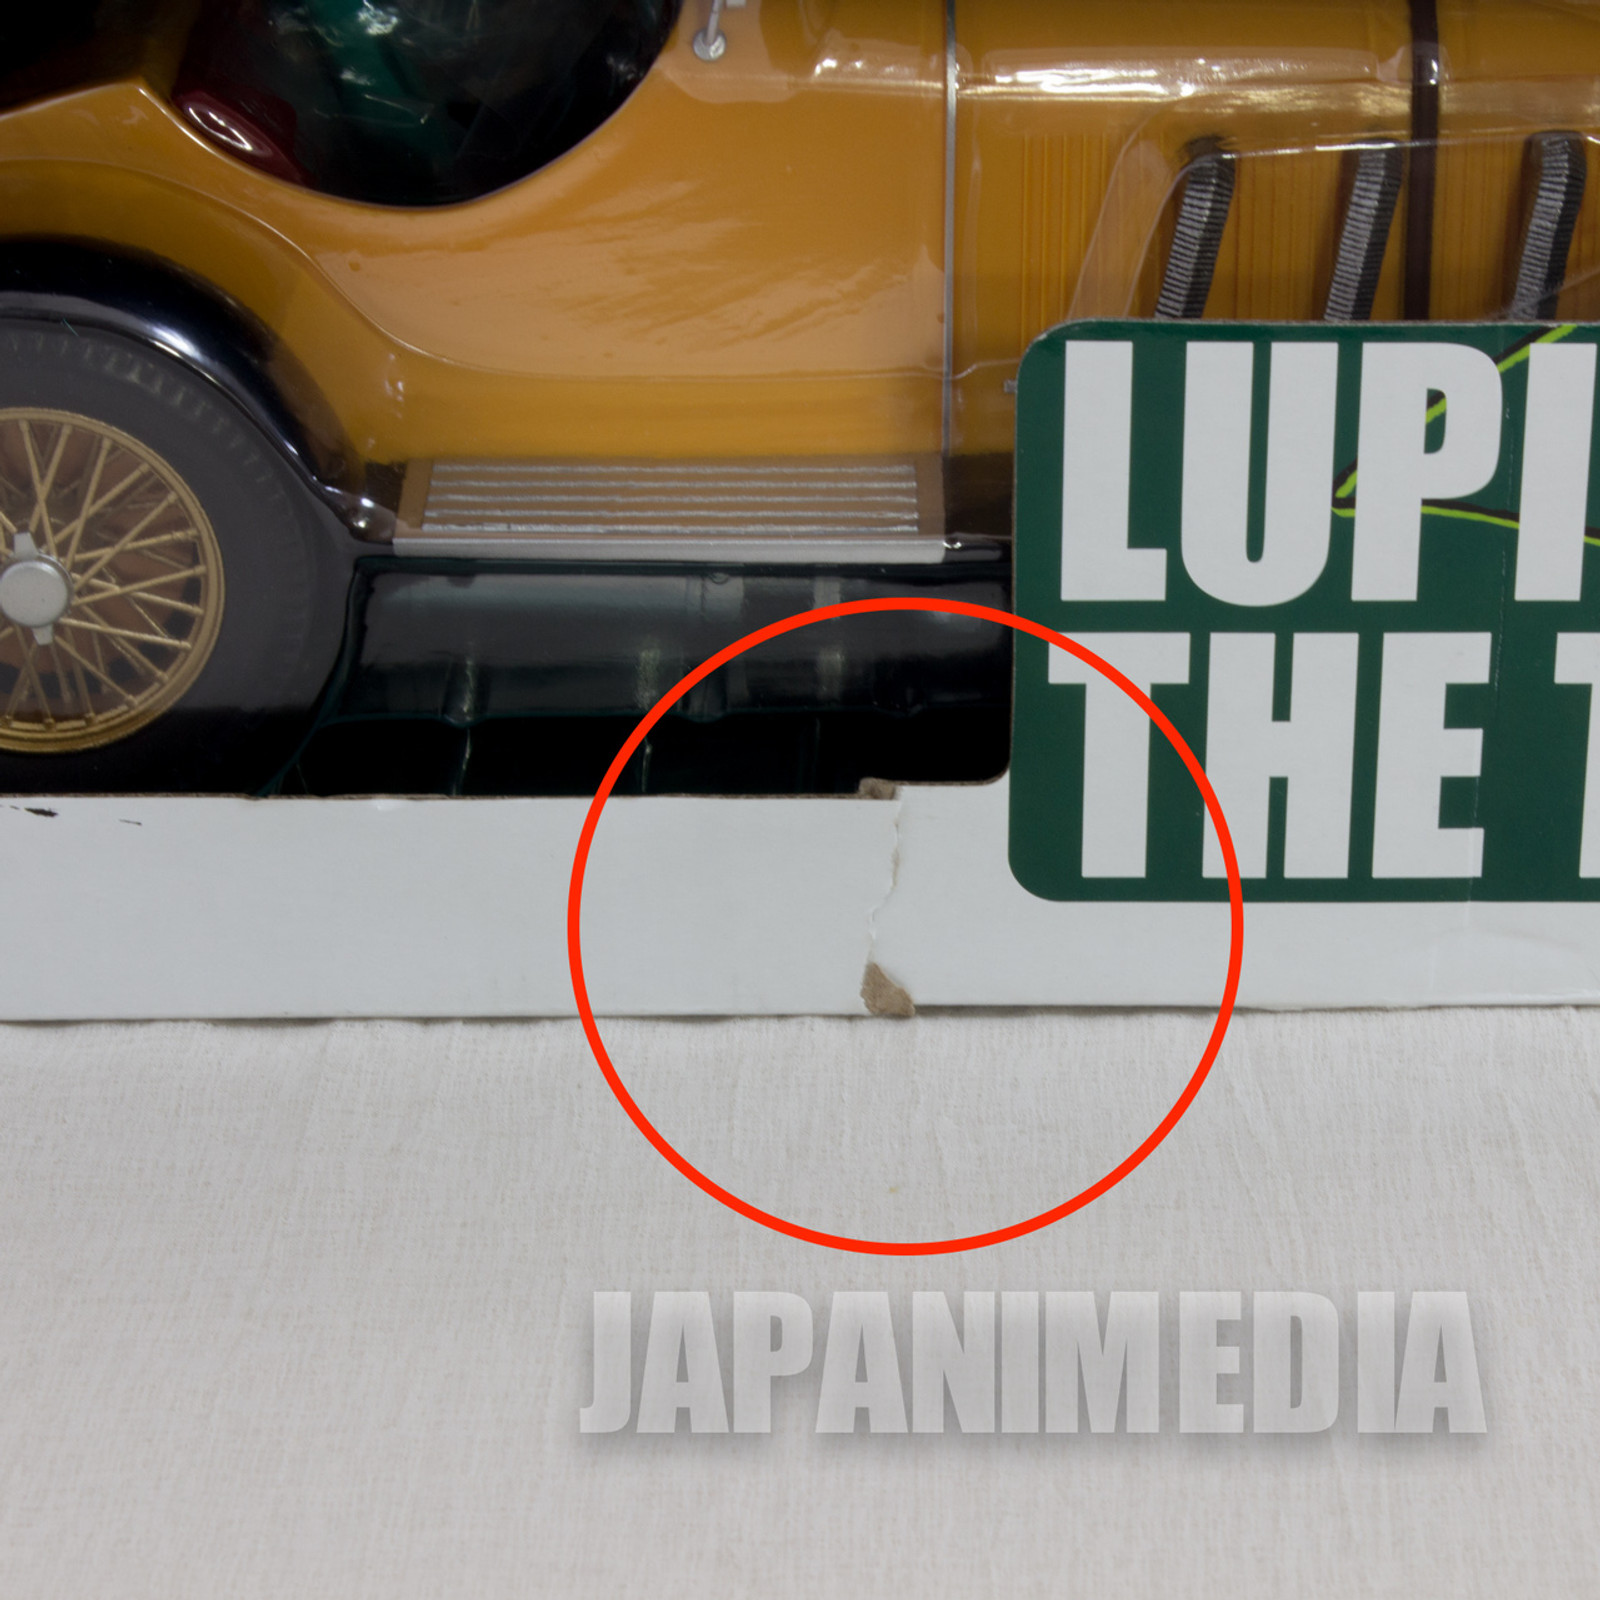 Lupin the Third (3rd) Model Car Mercedes Benz SSK Figure Banpresto JAPAN